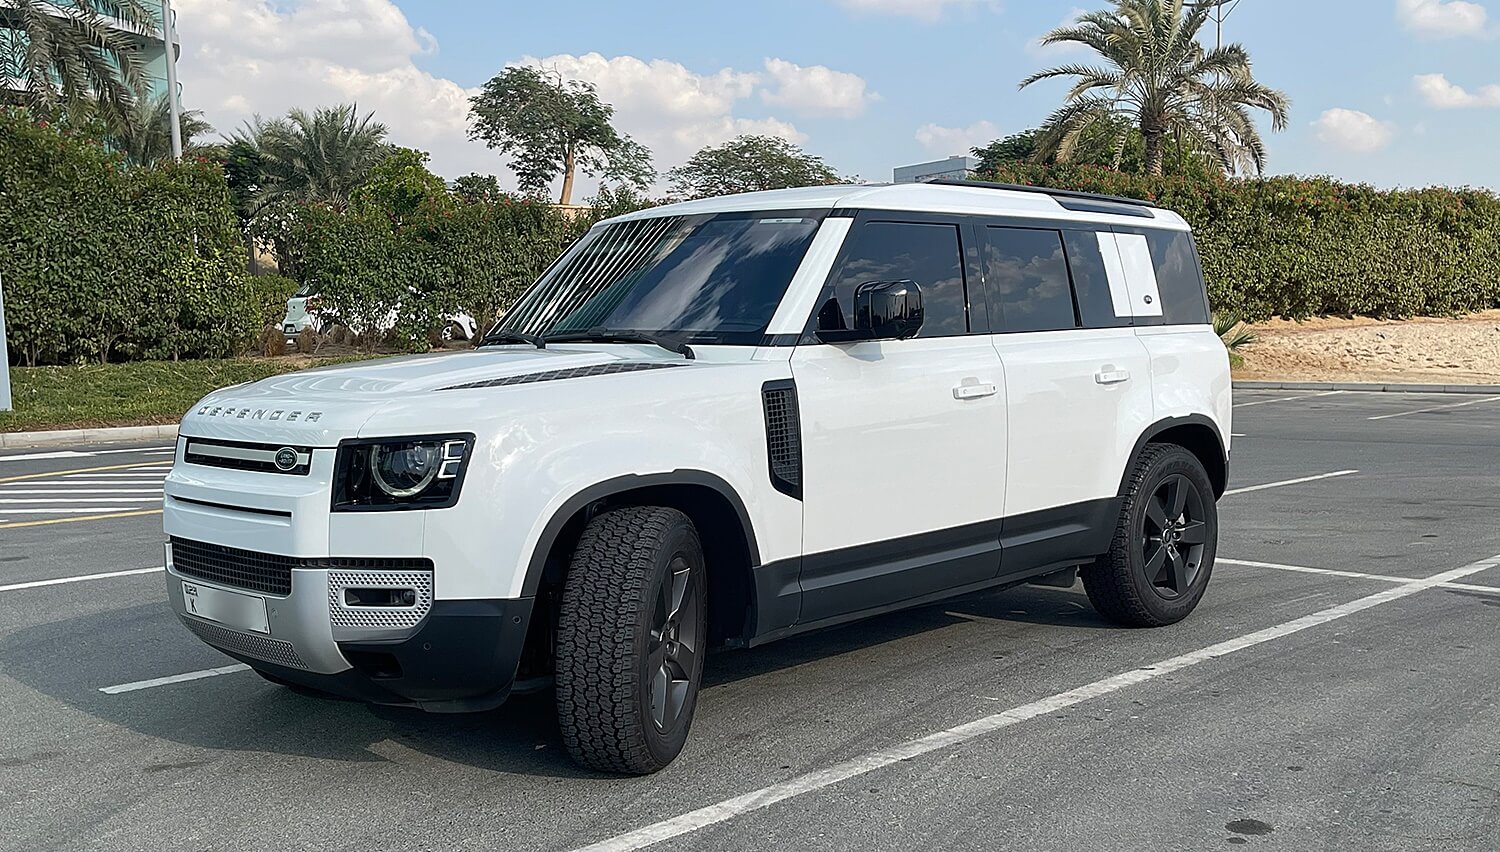 Range Rover Defender Rental Dubai